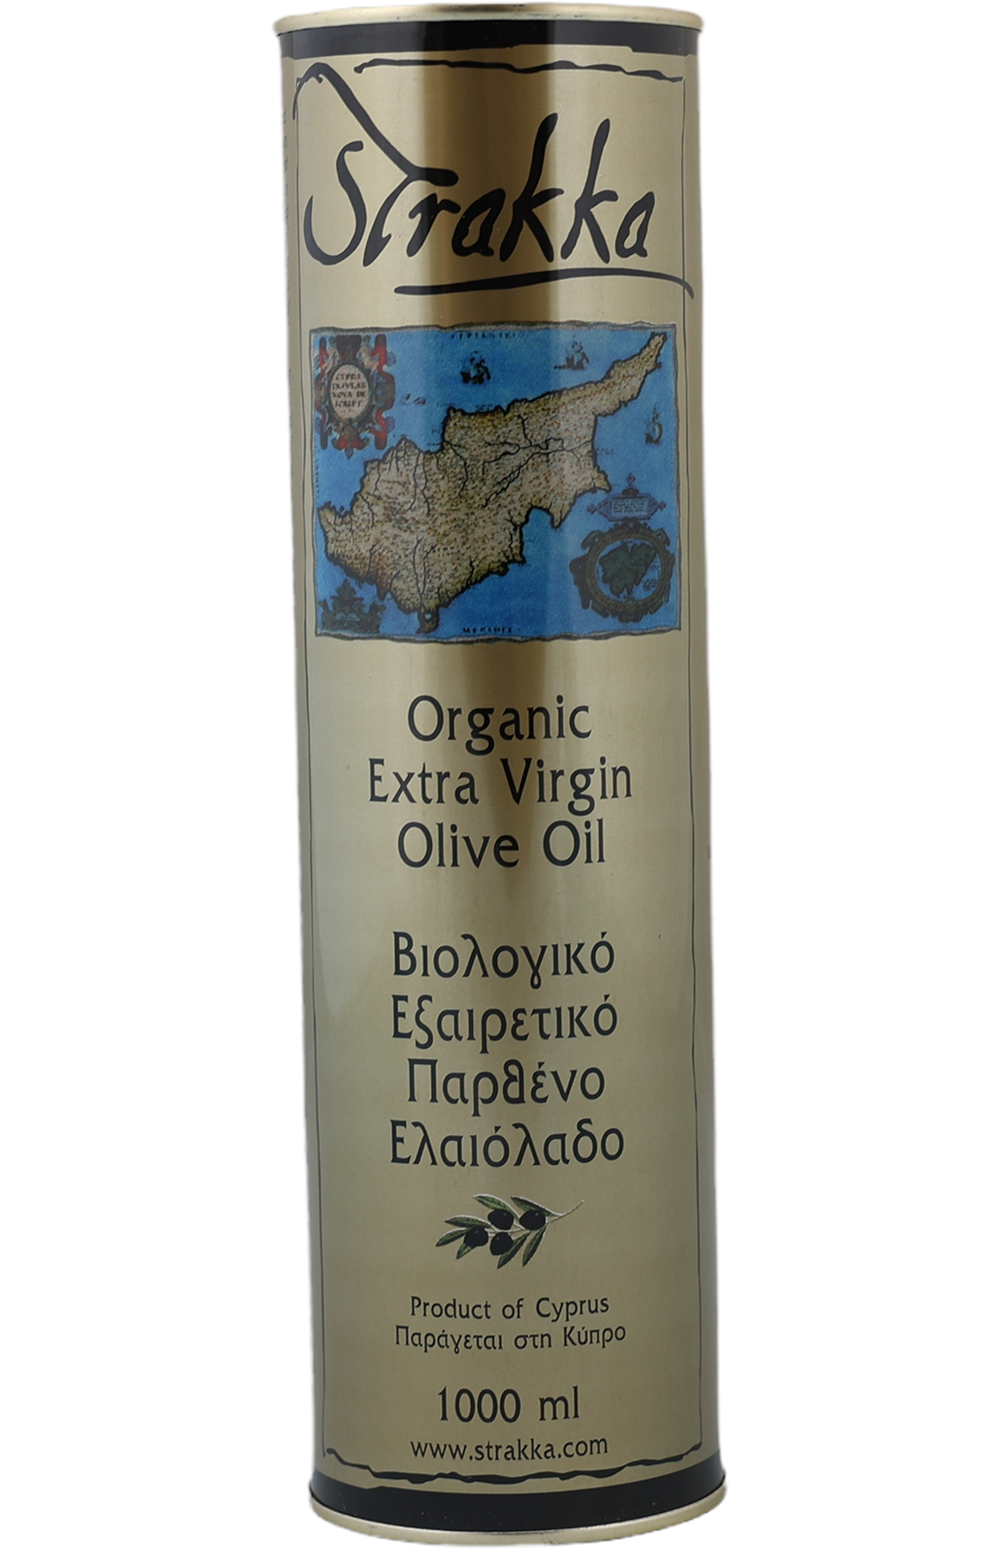 Strakka Organic Extra Virgin Olive Oil